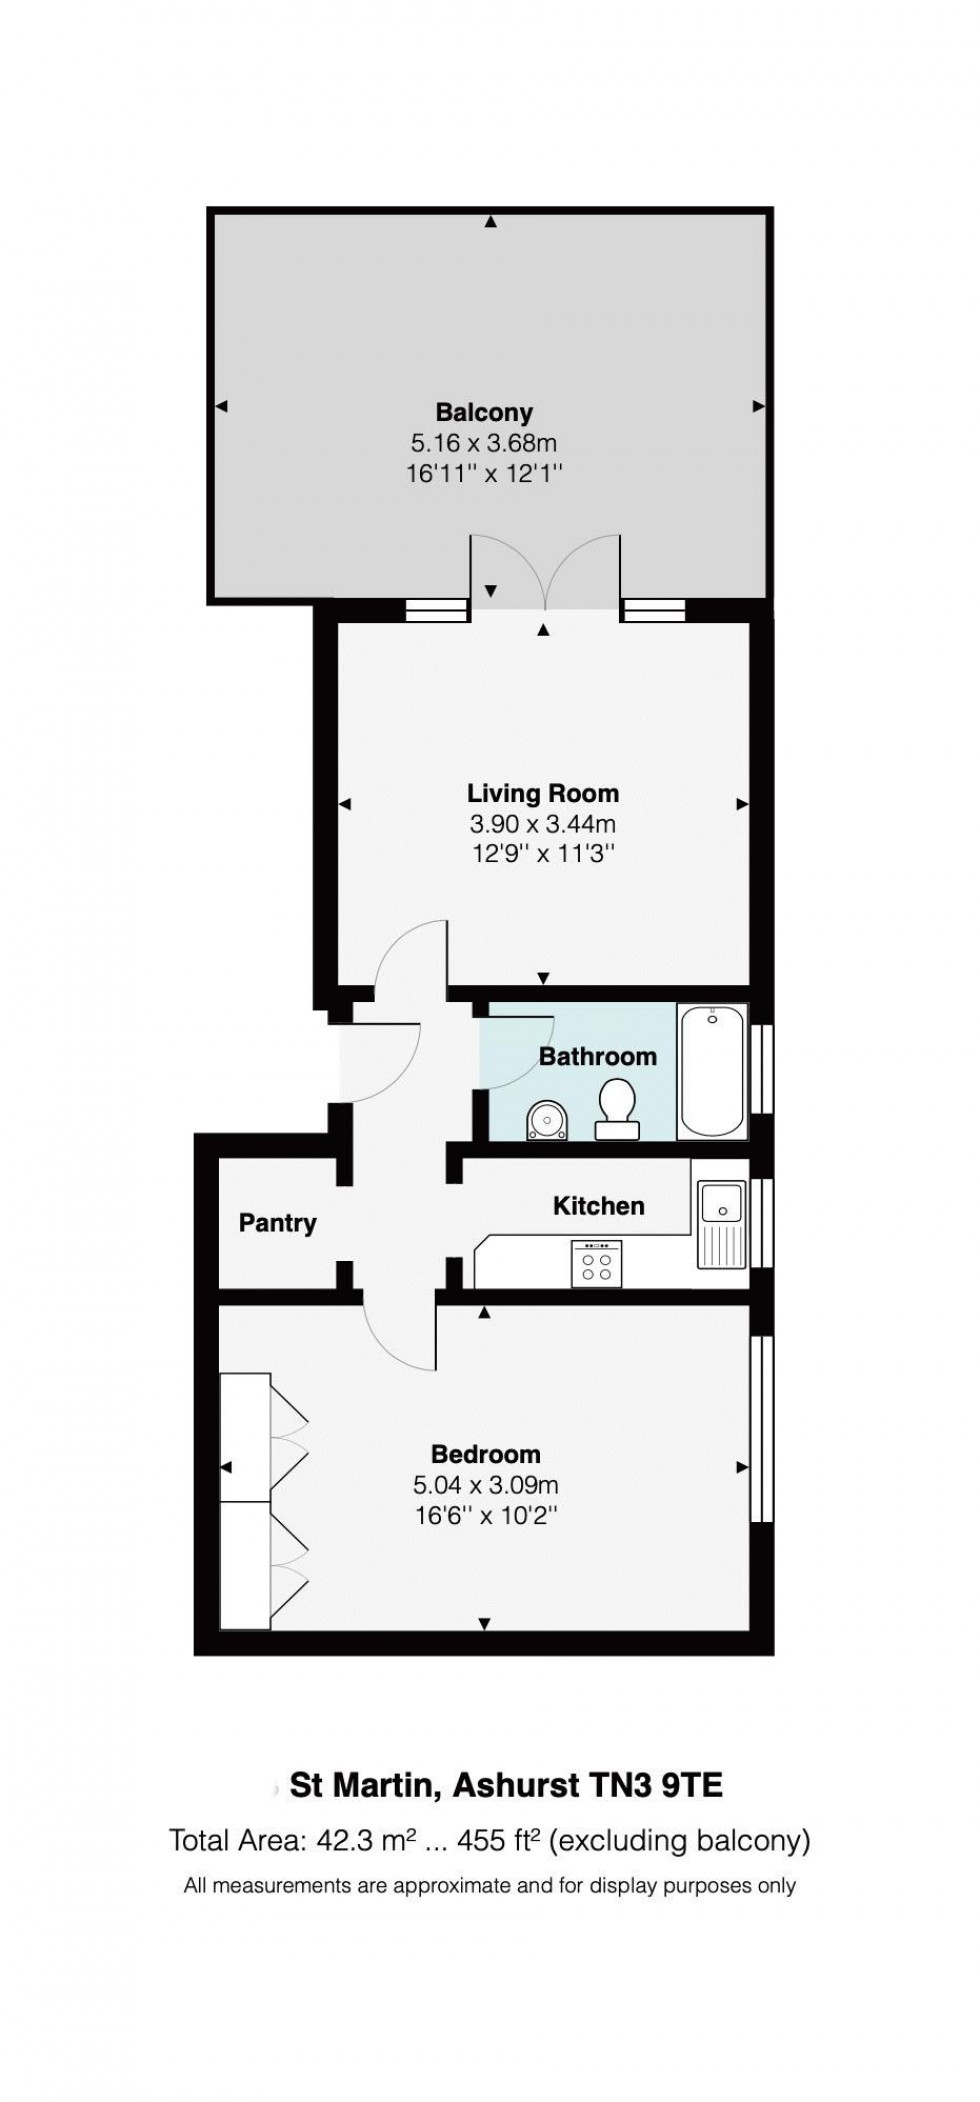 Floorplan for 1 Bedroom First Floor Flat with Parking & Private Terrace, St Martins, Tunbridge Wells